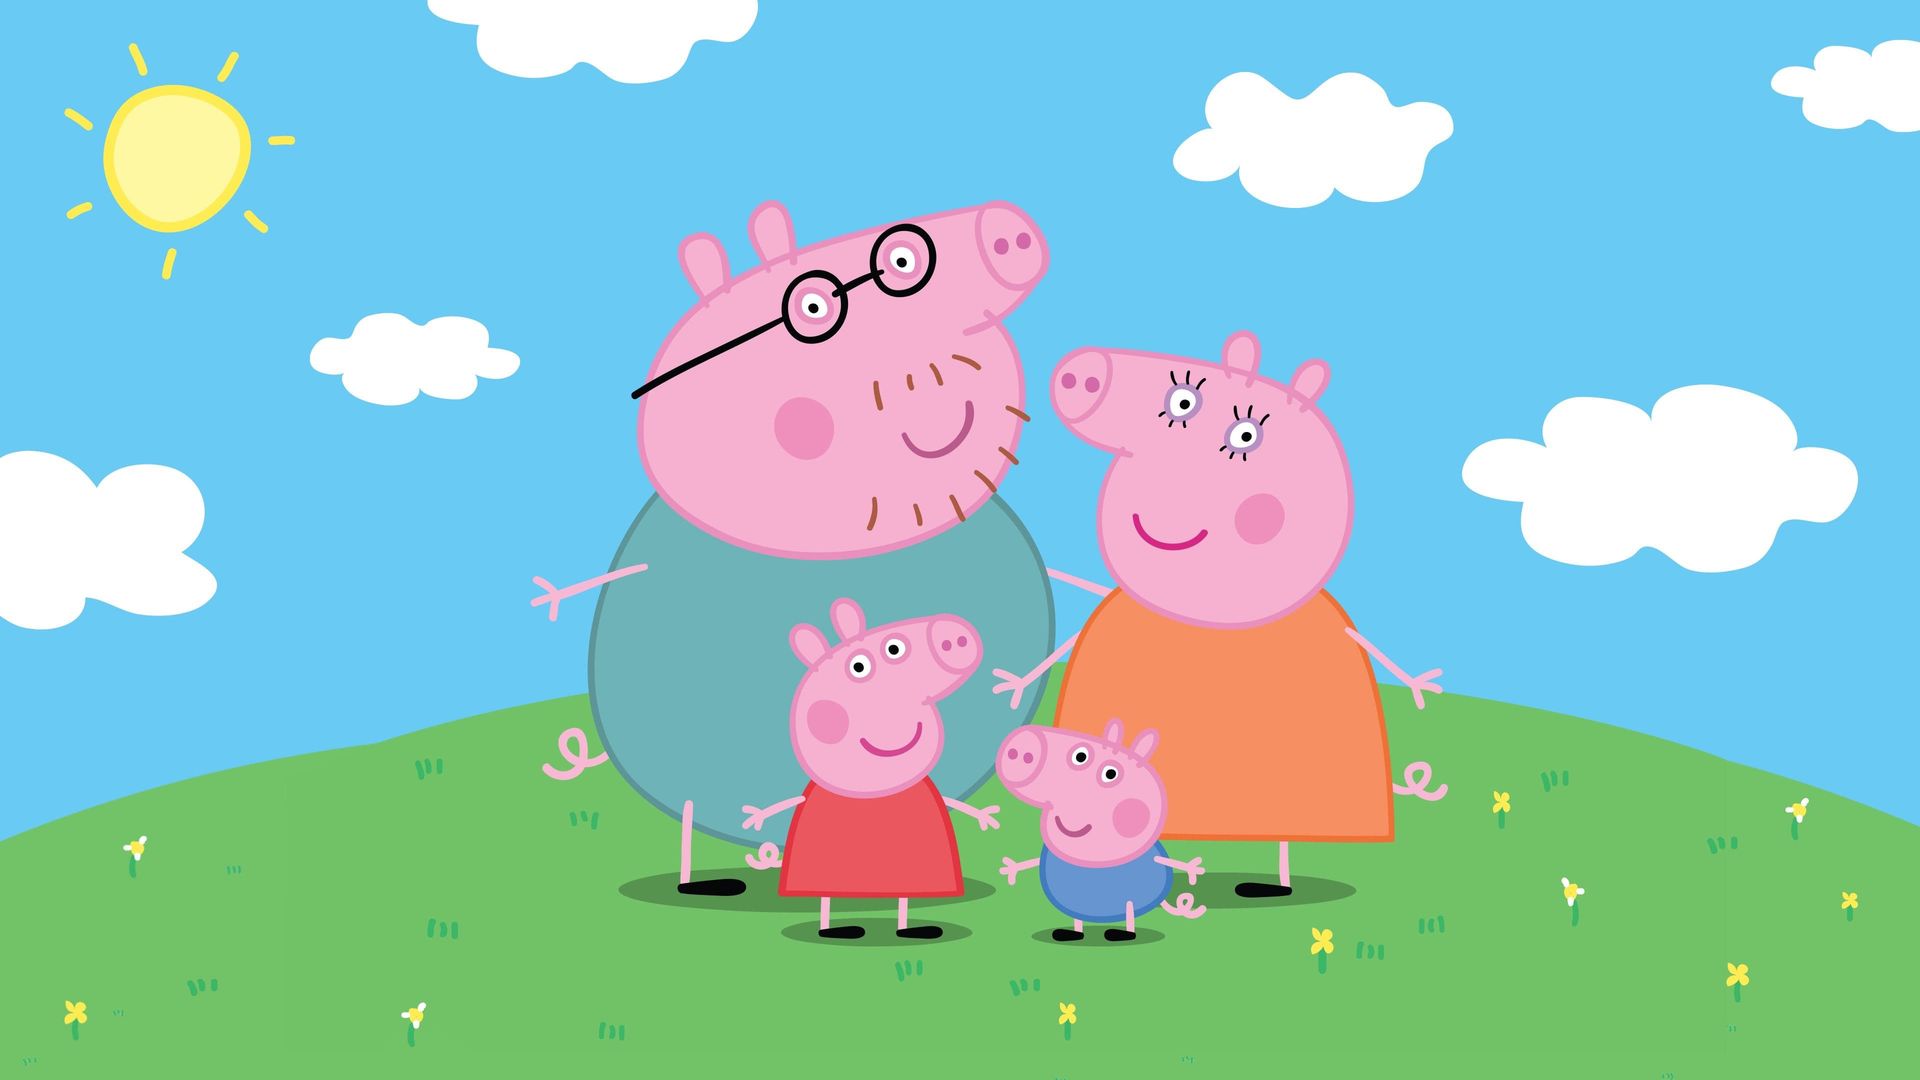 Peppa Pig Full Episodes, Season 8, Compilation 47